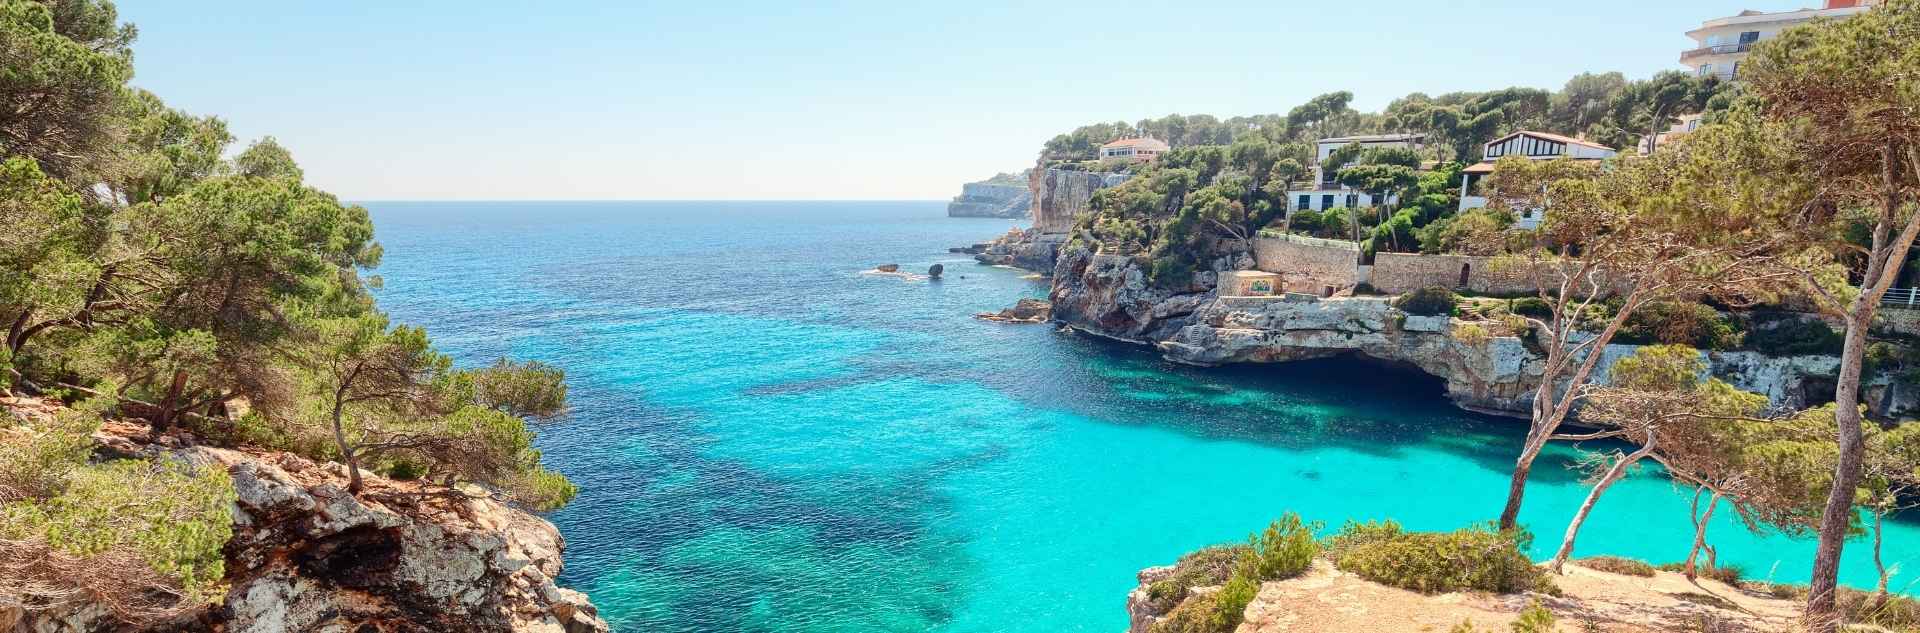 Mallorca Urlaub: Traumhafte Bucht